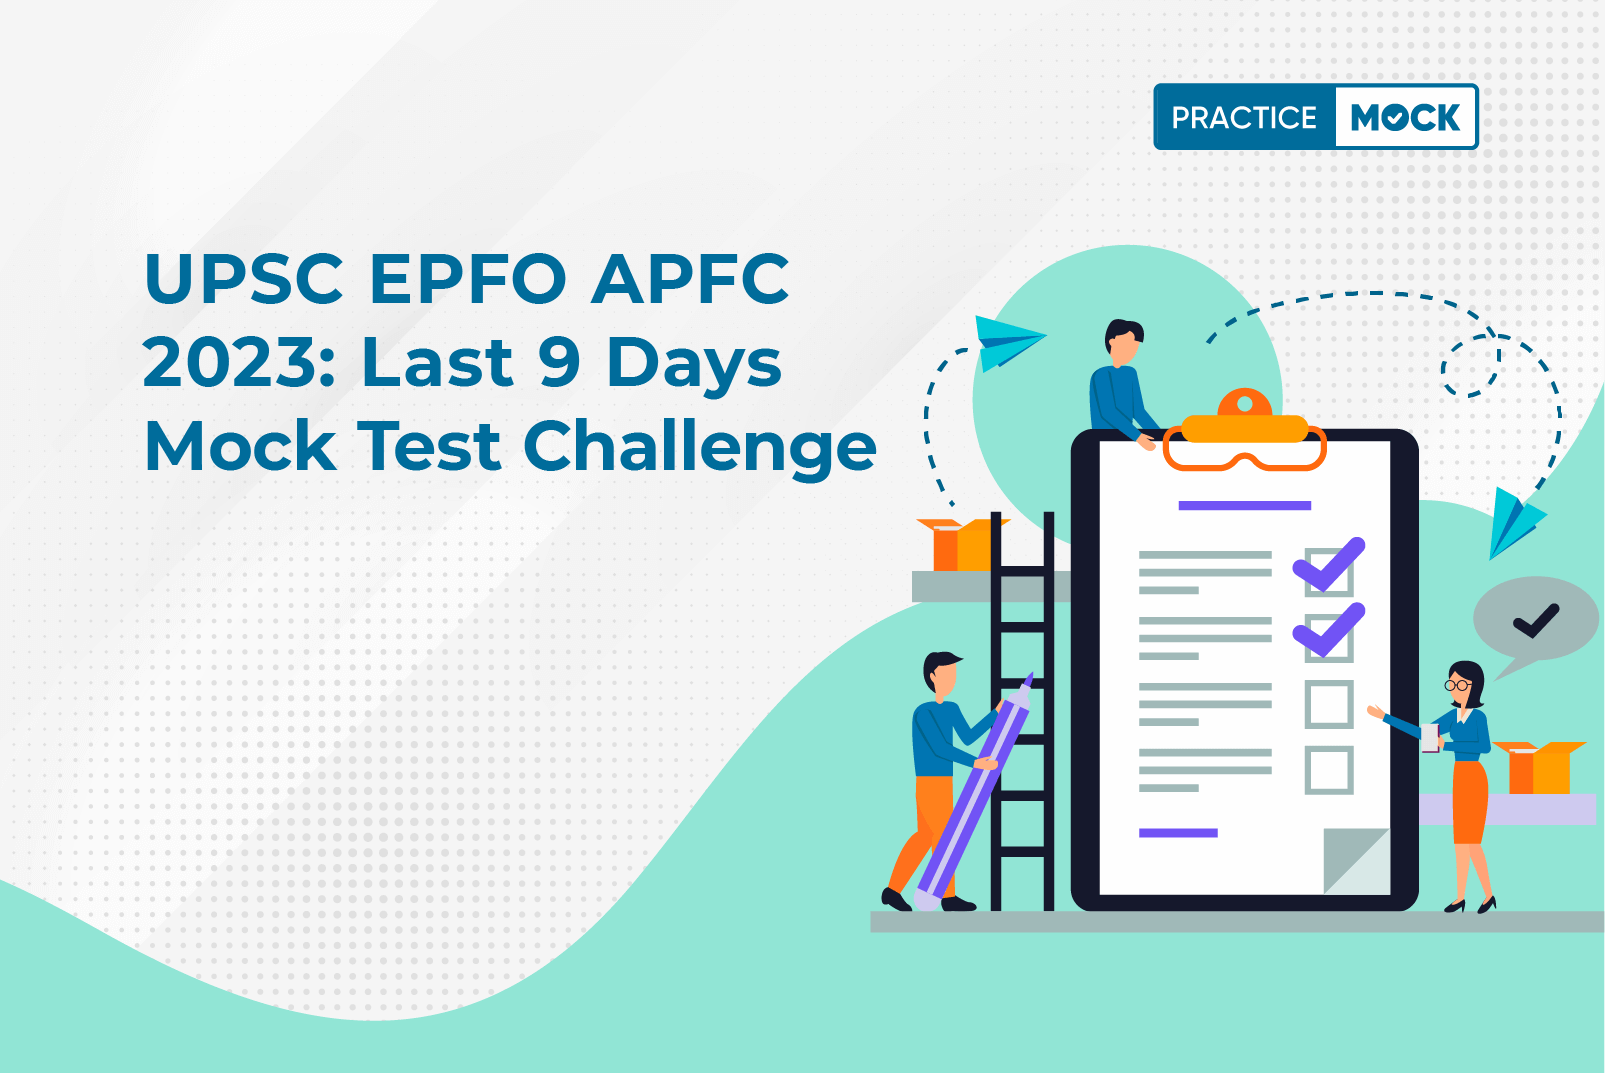 UPSC EPFO APFC 2023 Last 9 Days Mock Test Challenge